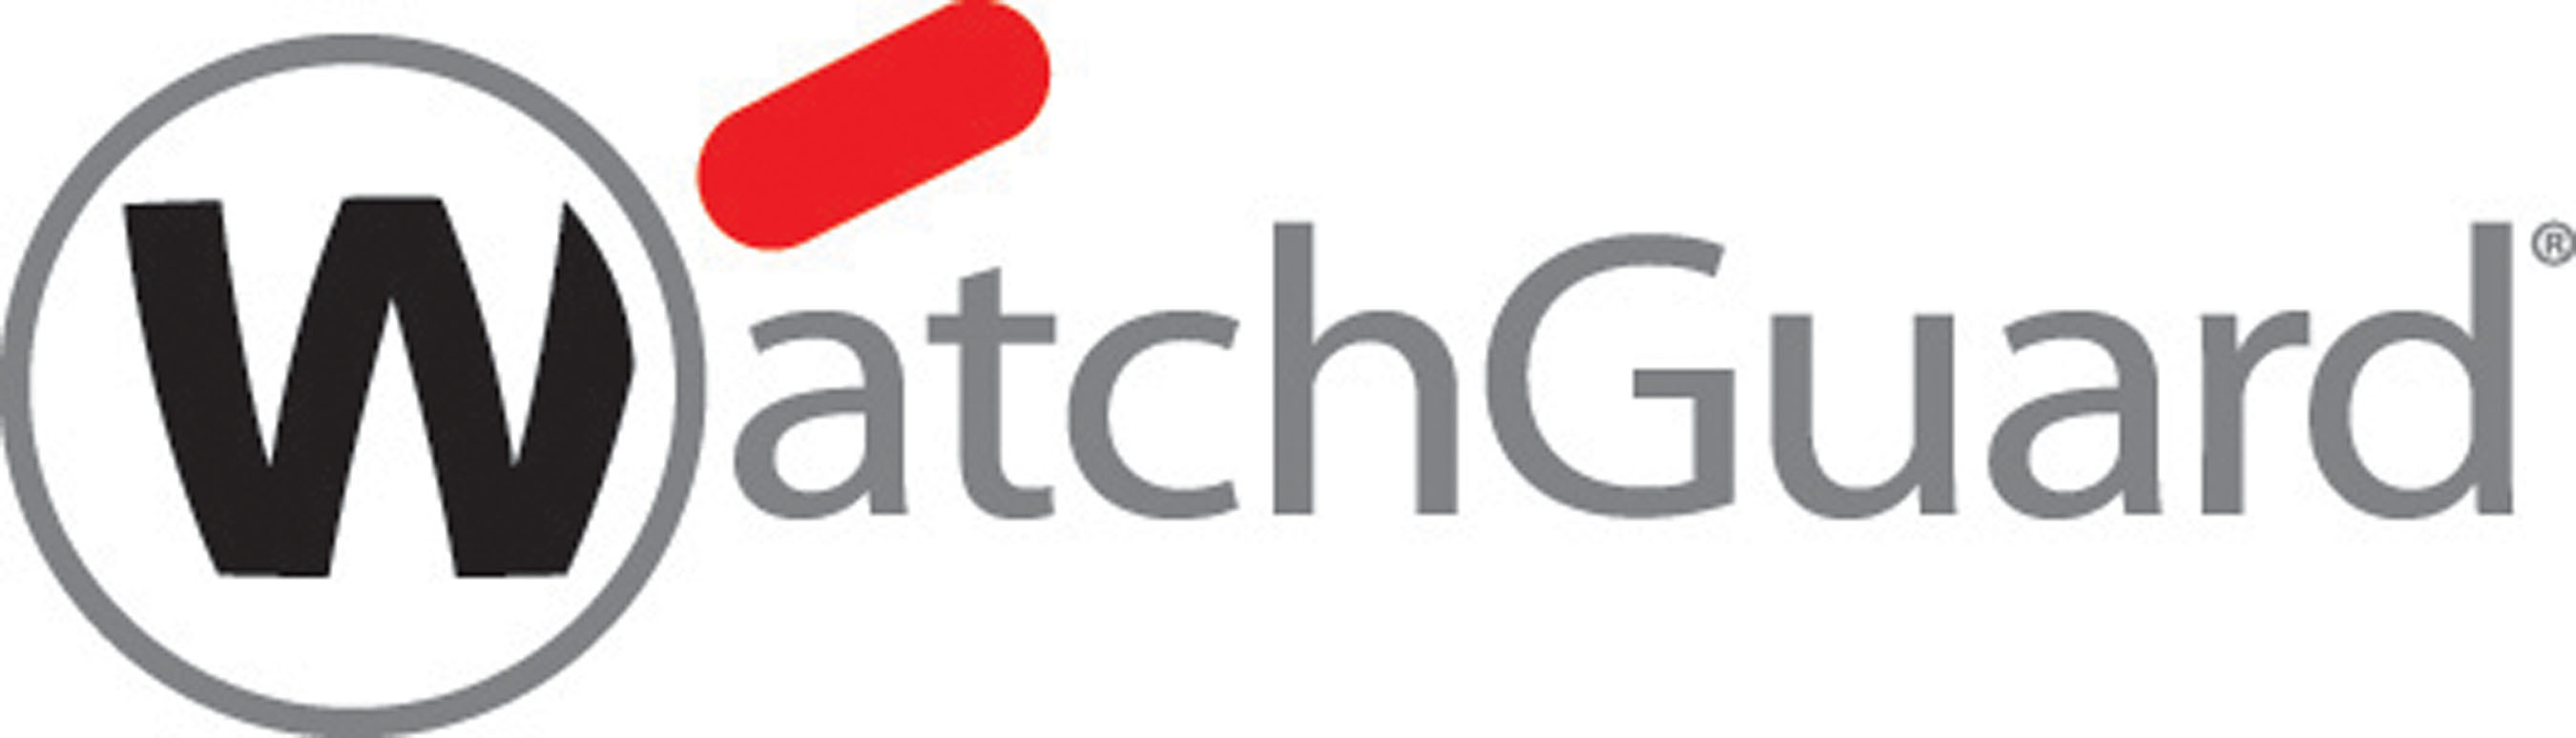 WatchGuard Technologies, Inc. Logo. (PRNewsFoto/WatchGuard Technologies, Inc.) (PRNewsFoto/WATCHGUARD TECHNOLOGIES, INC.)